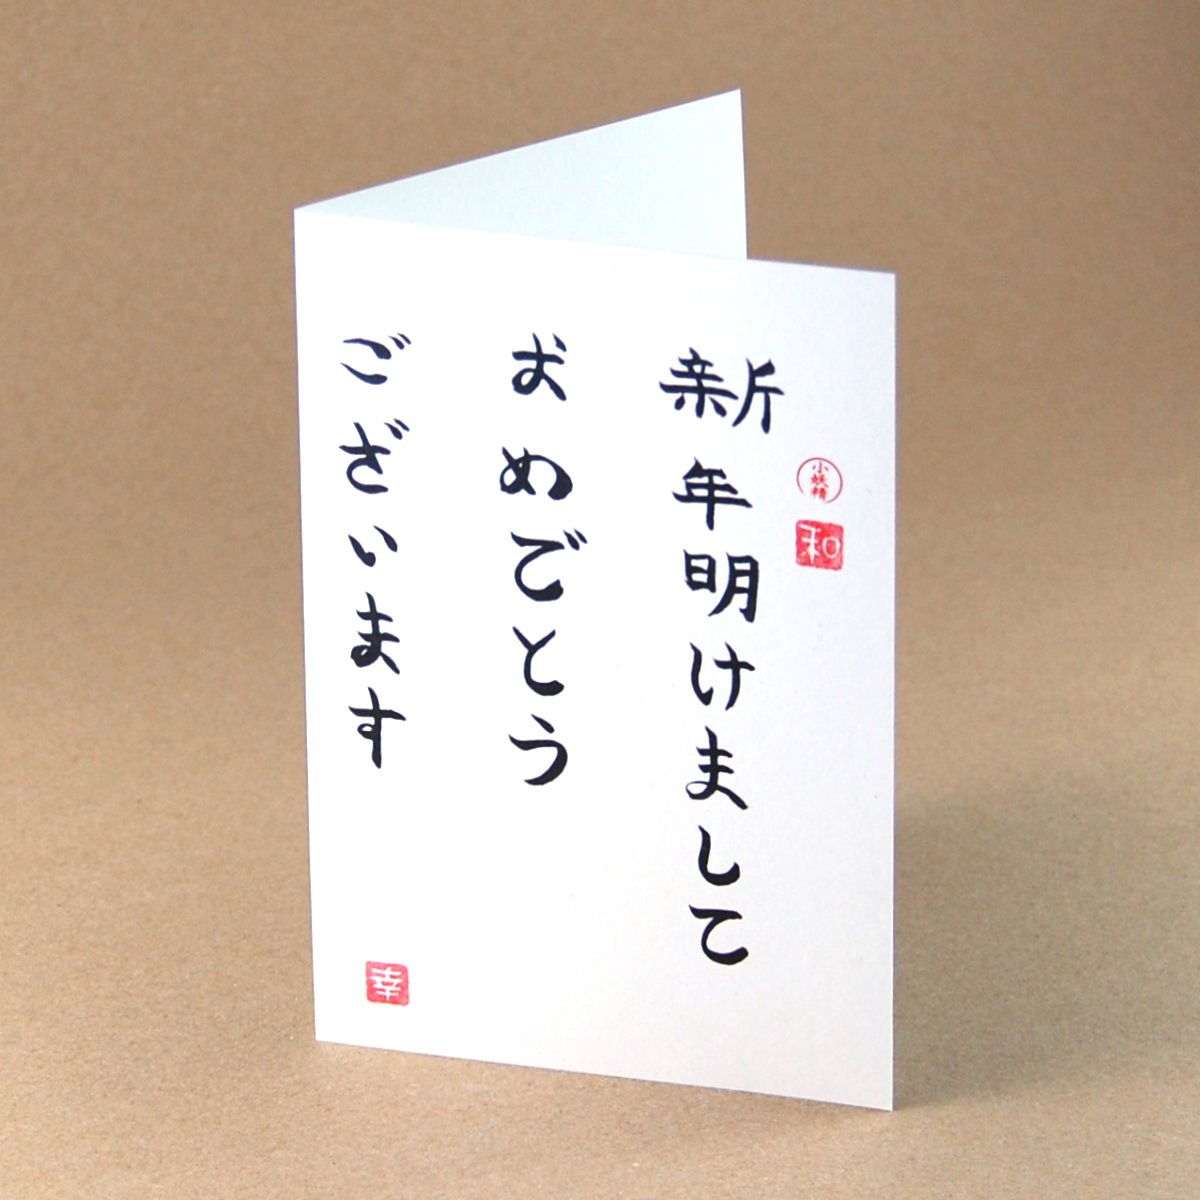 new year Cards with calligraphy: Shinnen akemashite omedetou gozaimasu